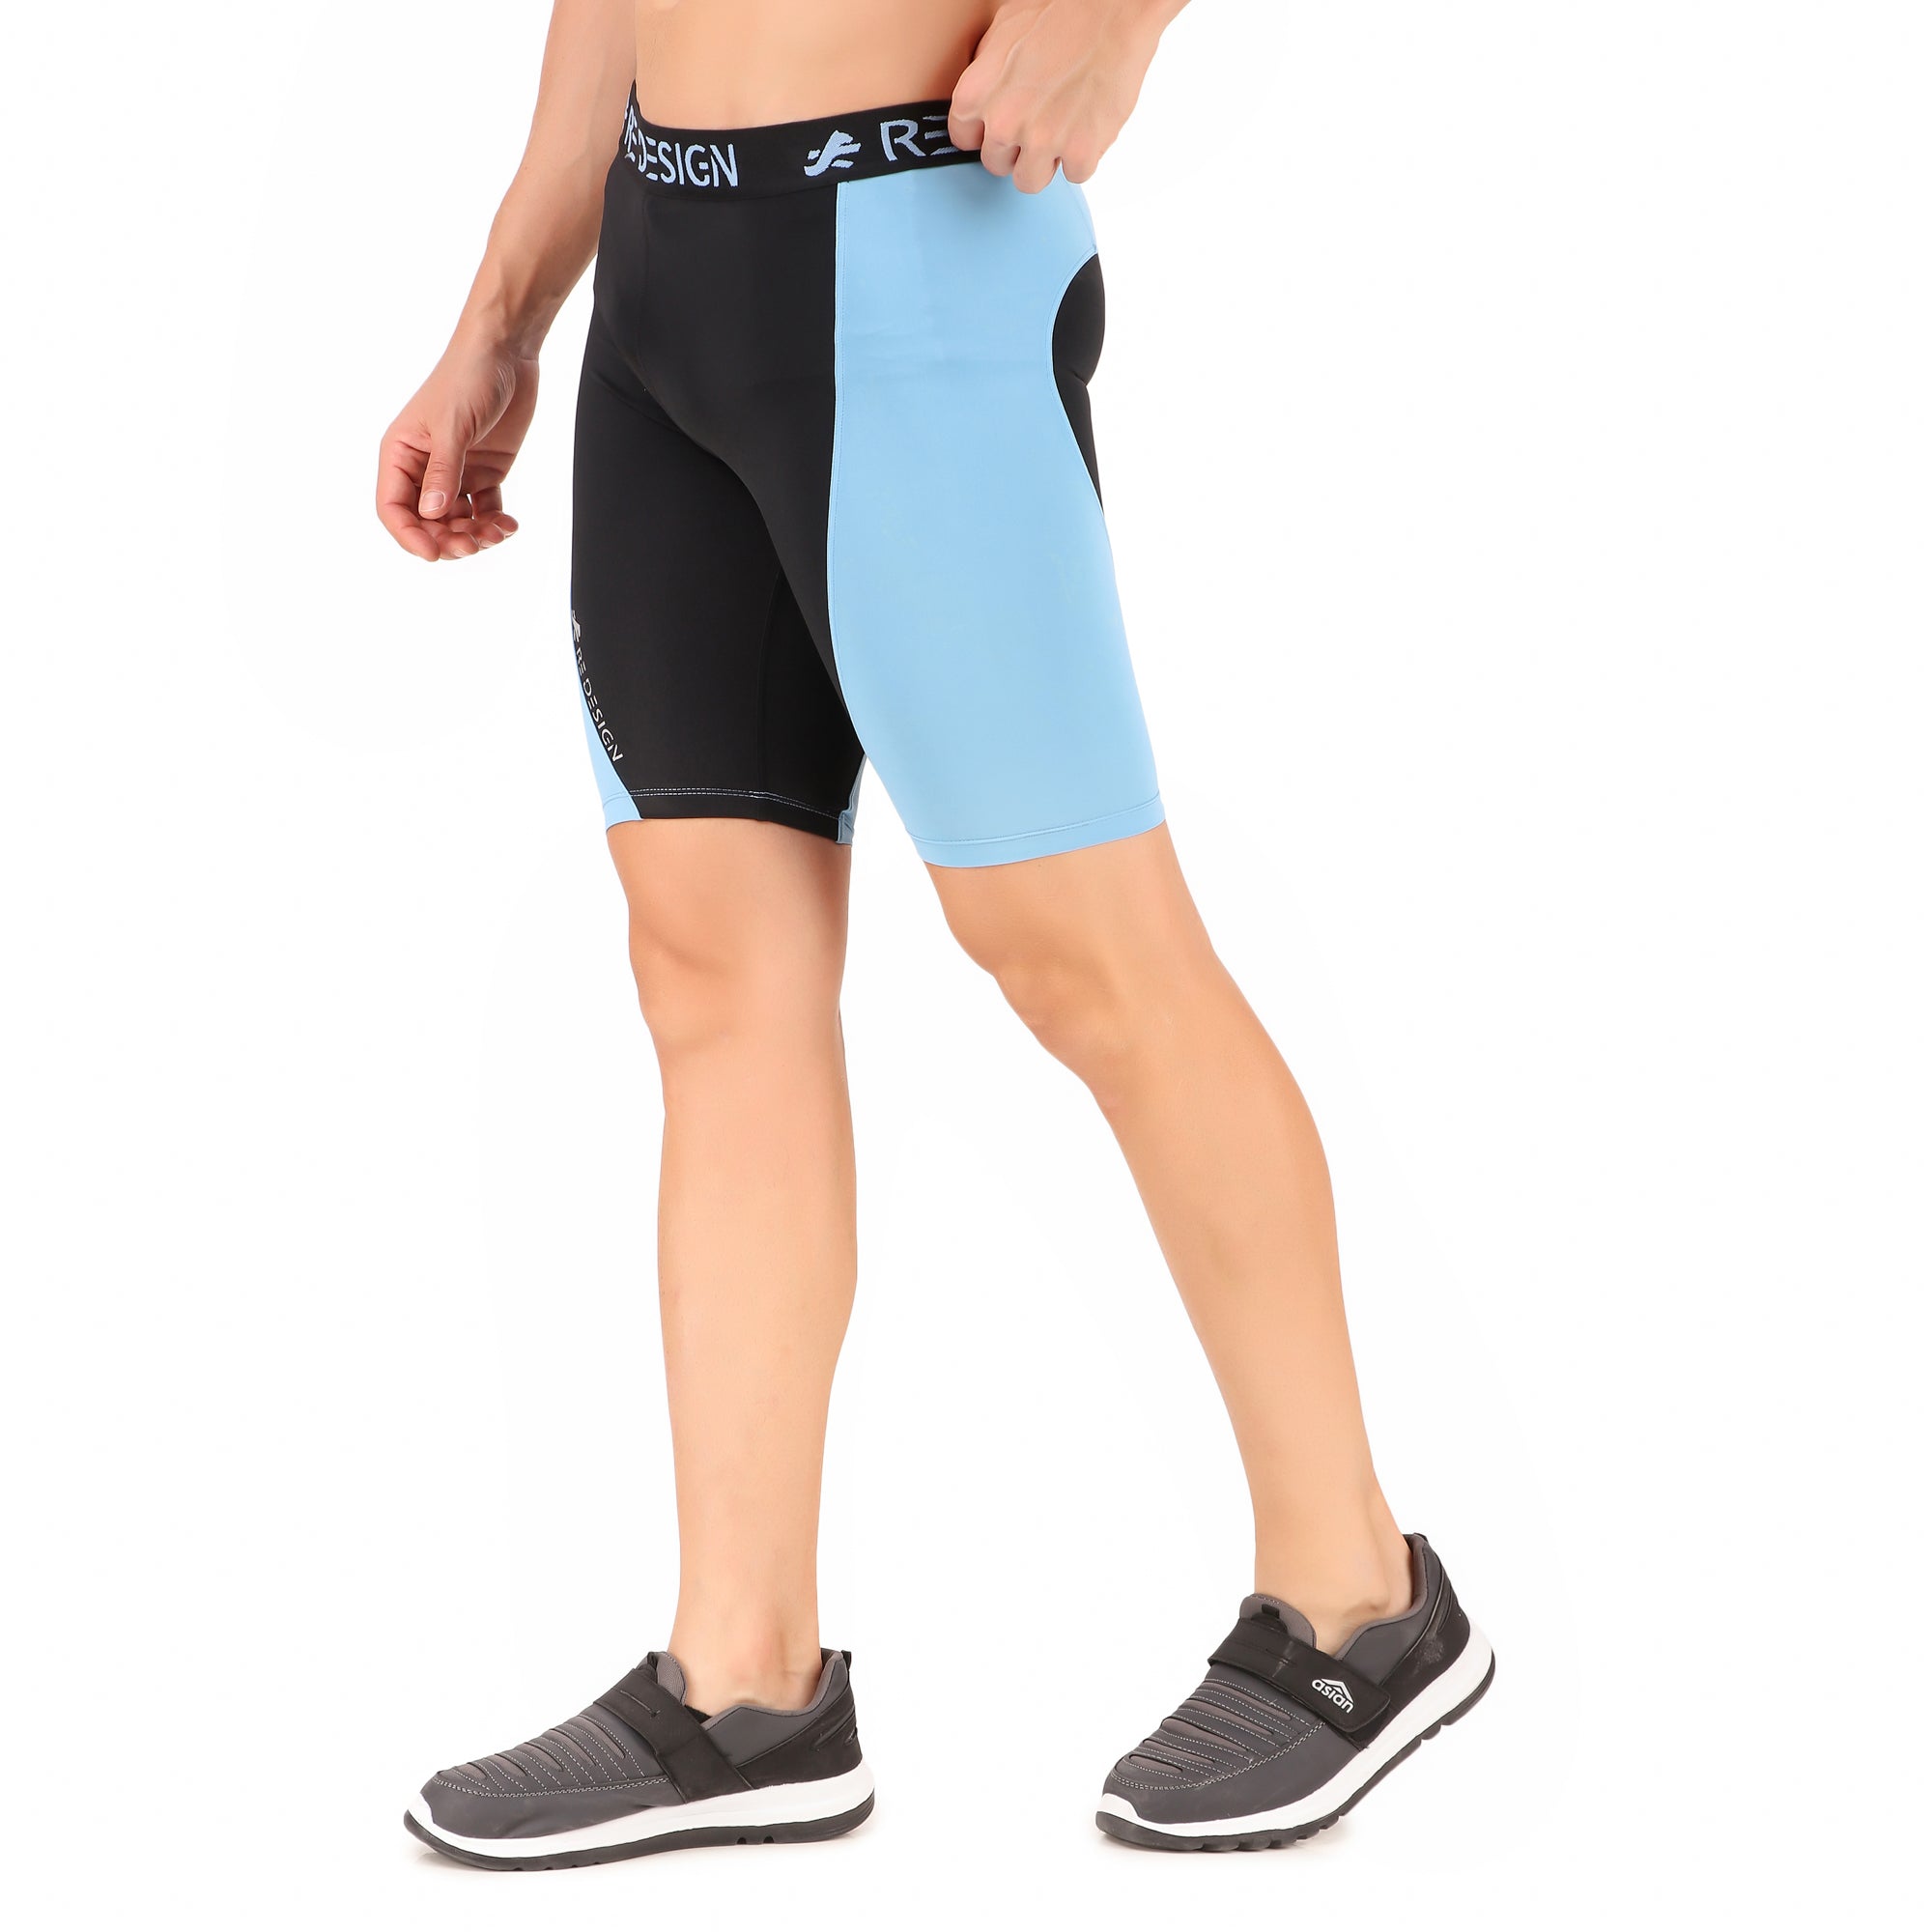 Nylon Compression Shorts and Half Tights For Men (BLACK/ROYAL BLUE) –  ReDesign Sports | Fahrradhosen